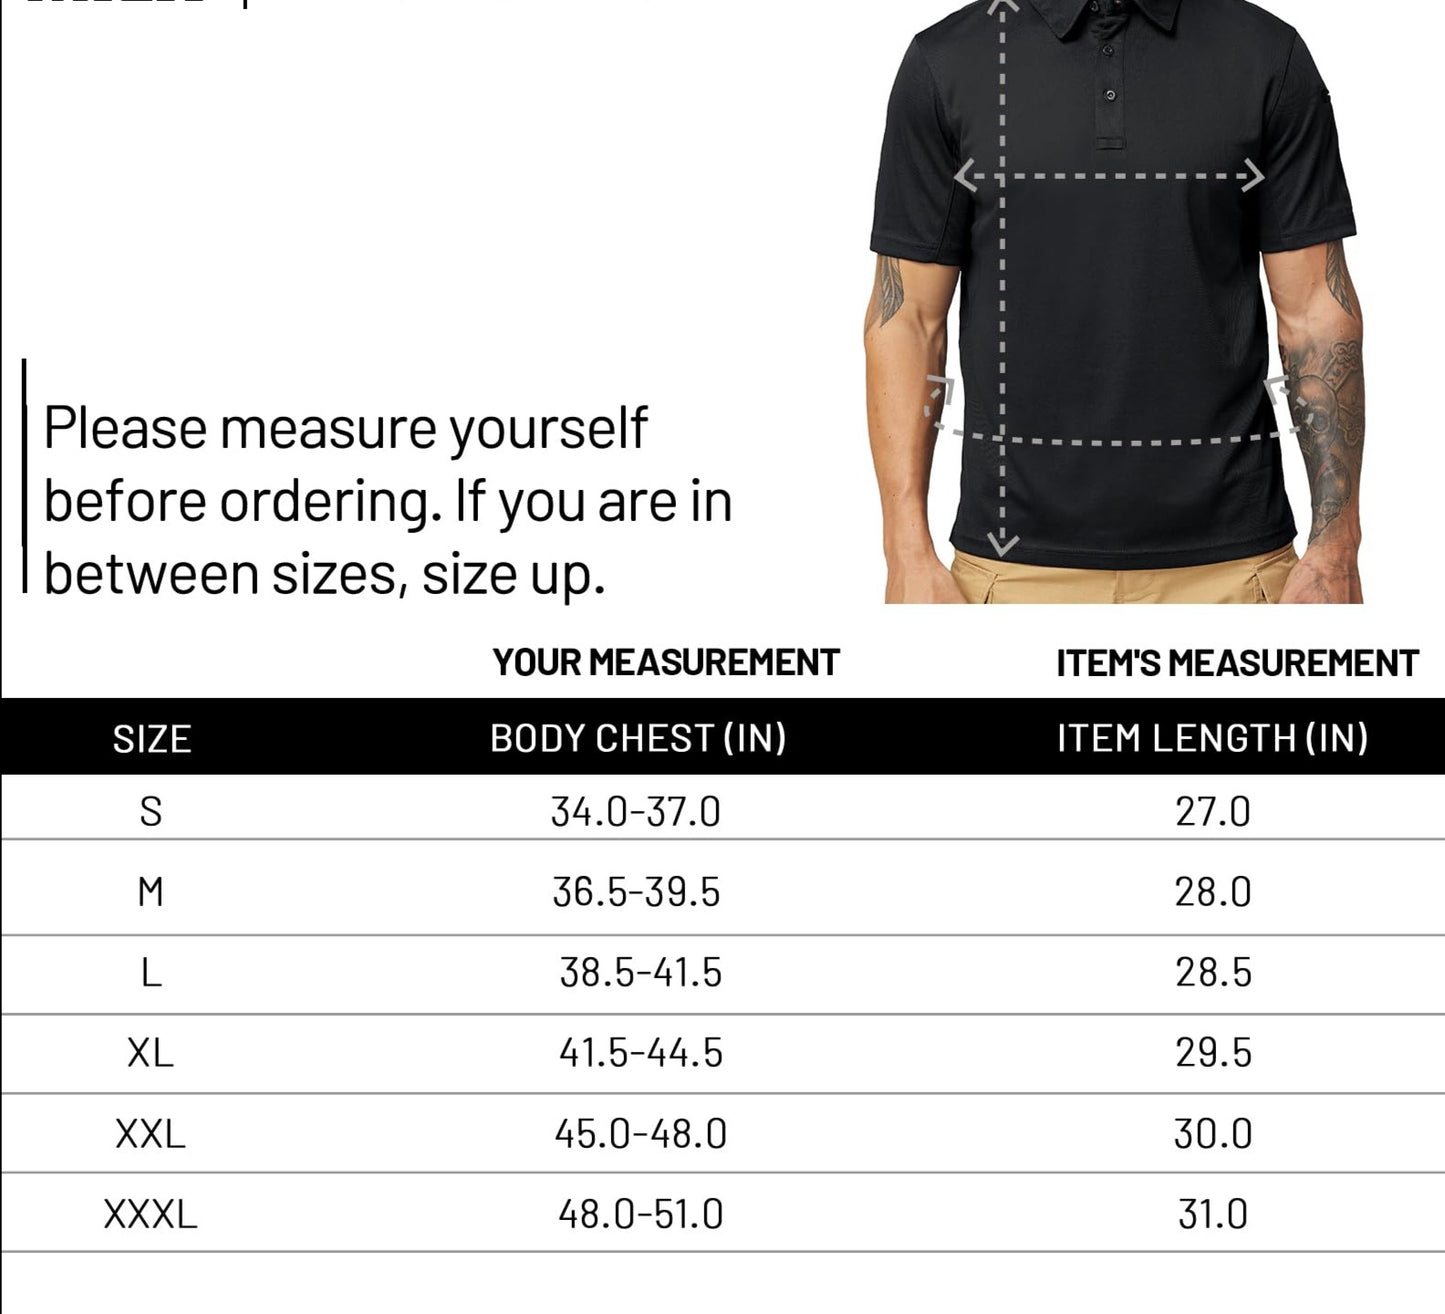 Show Black Polo Short Sleeve Shirts, Moisture-Wicking